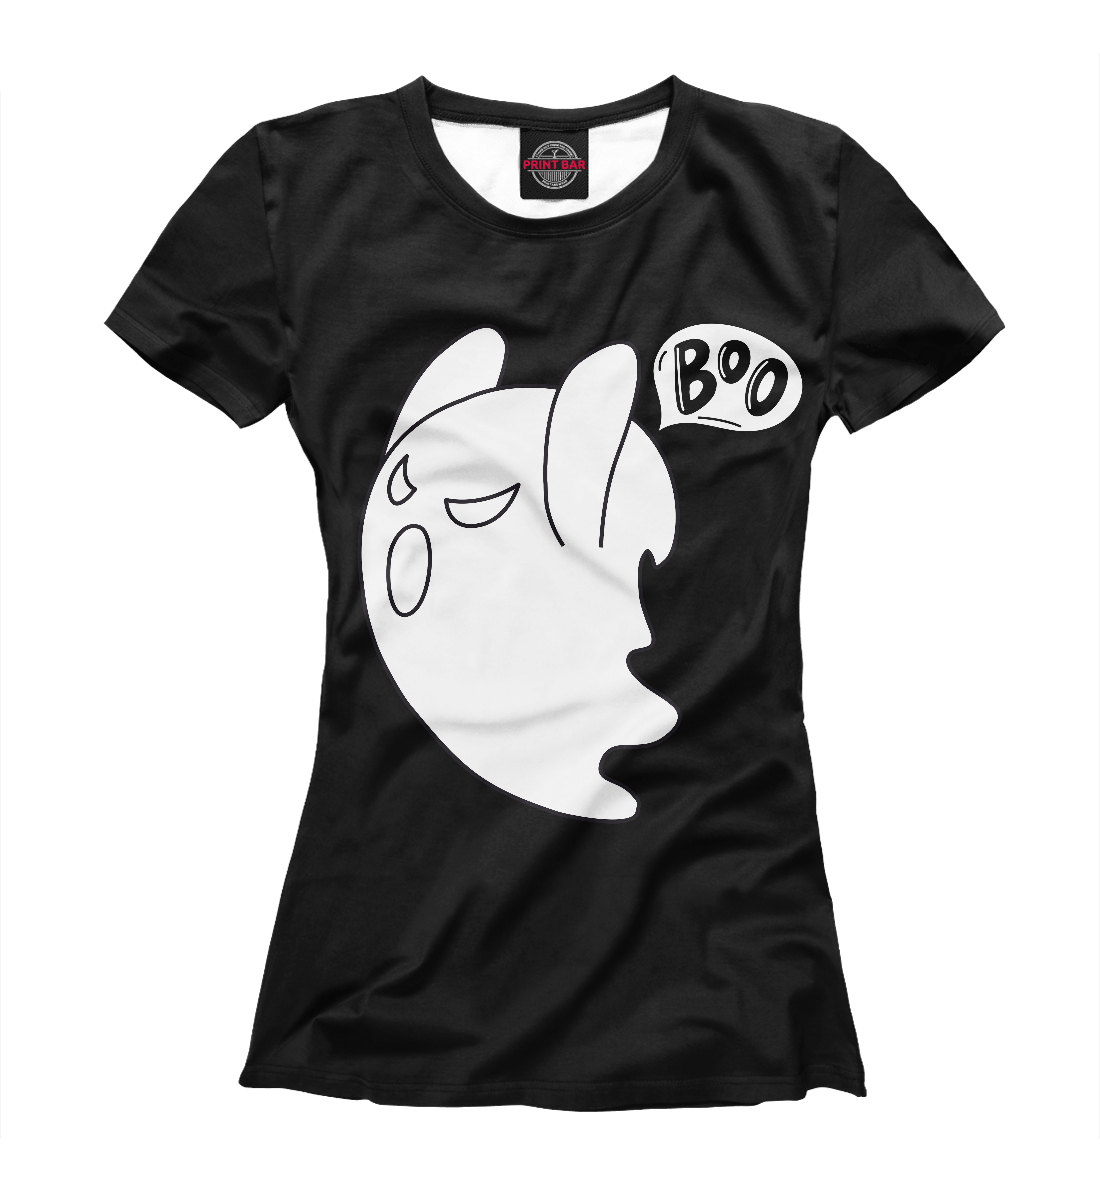 Футболка Boo Ghost \ Привидение Бу для девочек, артикул: HAL-747144-fut-1mp